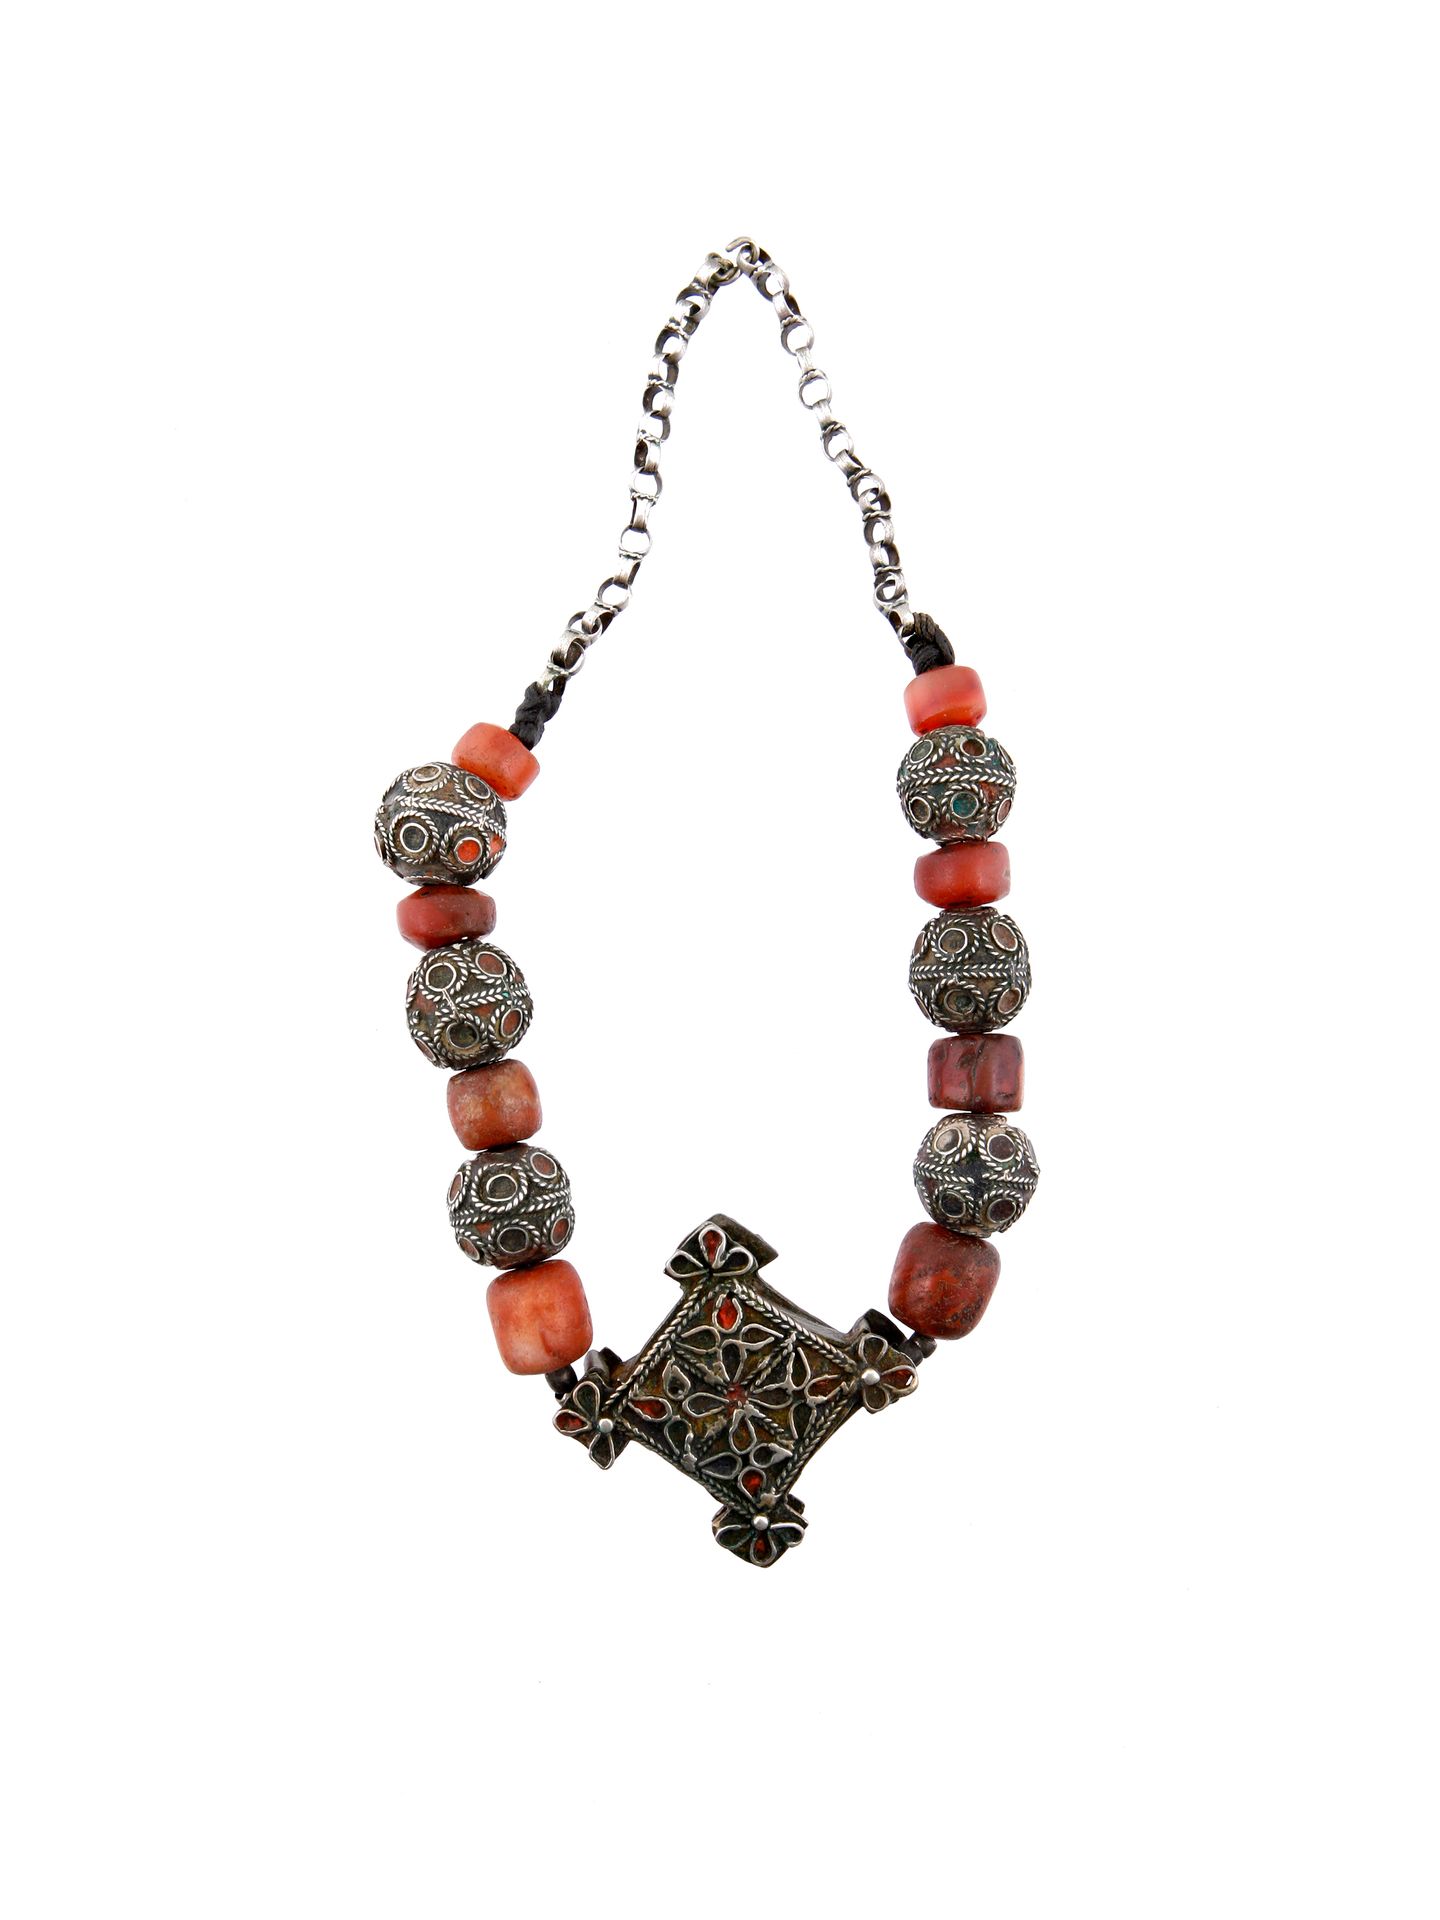 A Berber Necklace with a central Pendant Collier avec pendentif central

Berbère&hellip;